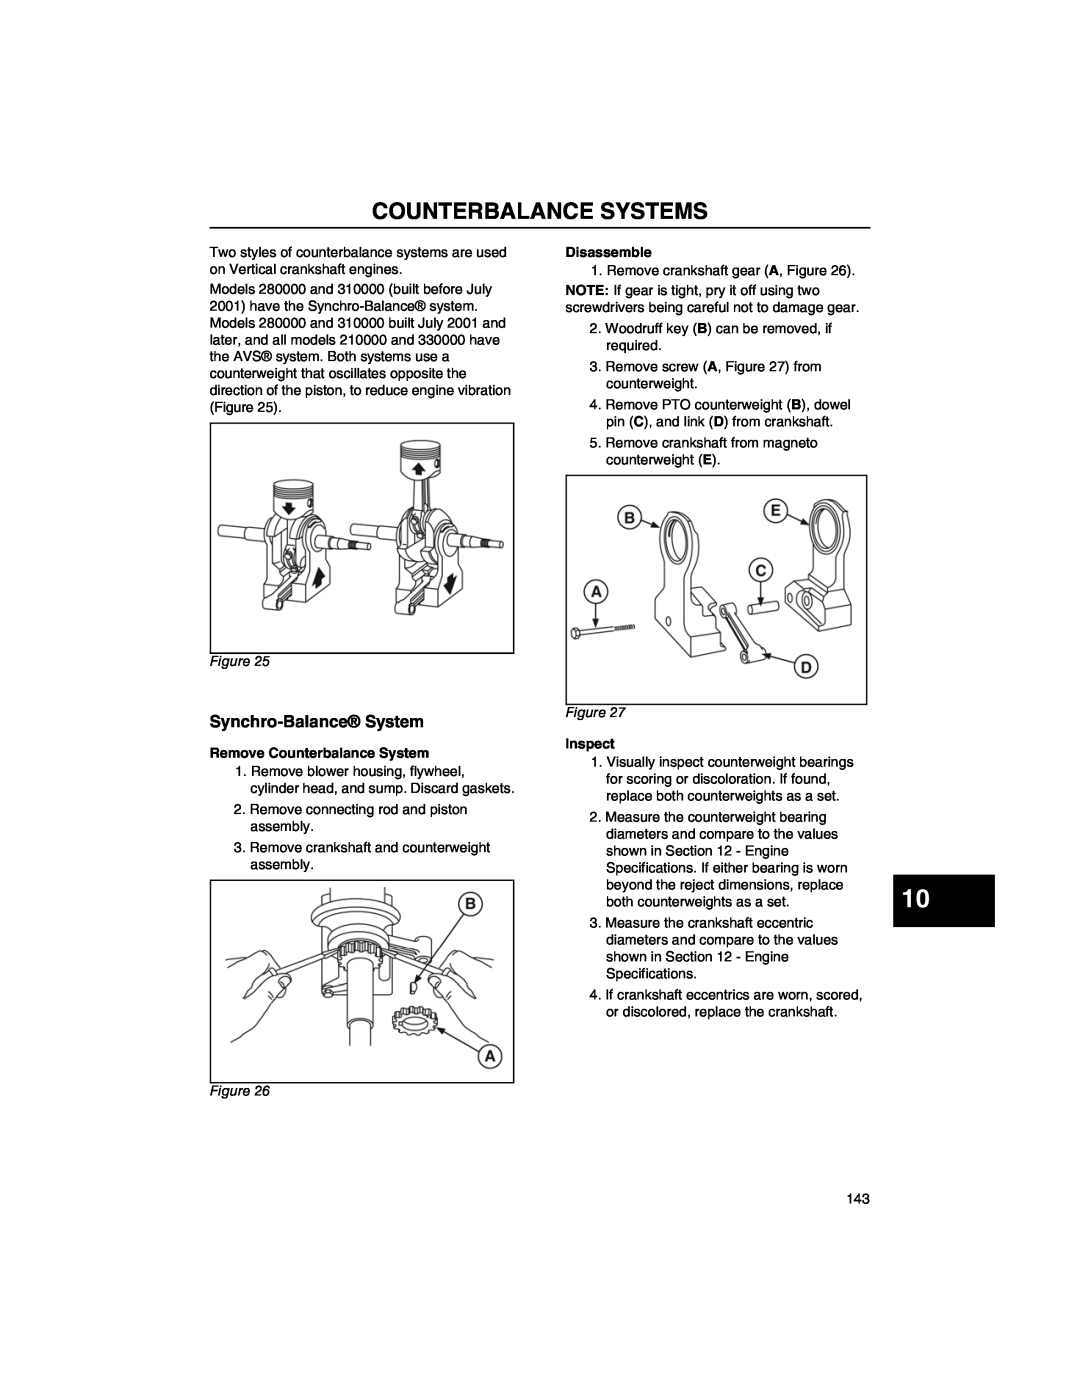 Briggs & Stratton 270962 Counterbalance Systems, Synchro-BalanceSystem, Disassemble, Remove Counterbalance System, Inspect 